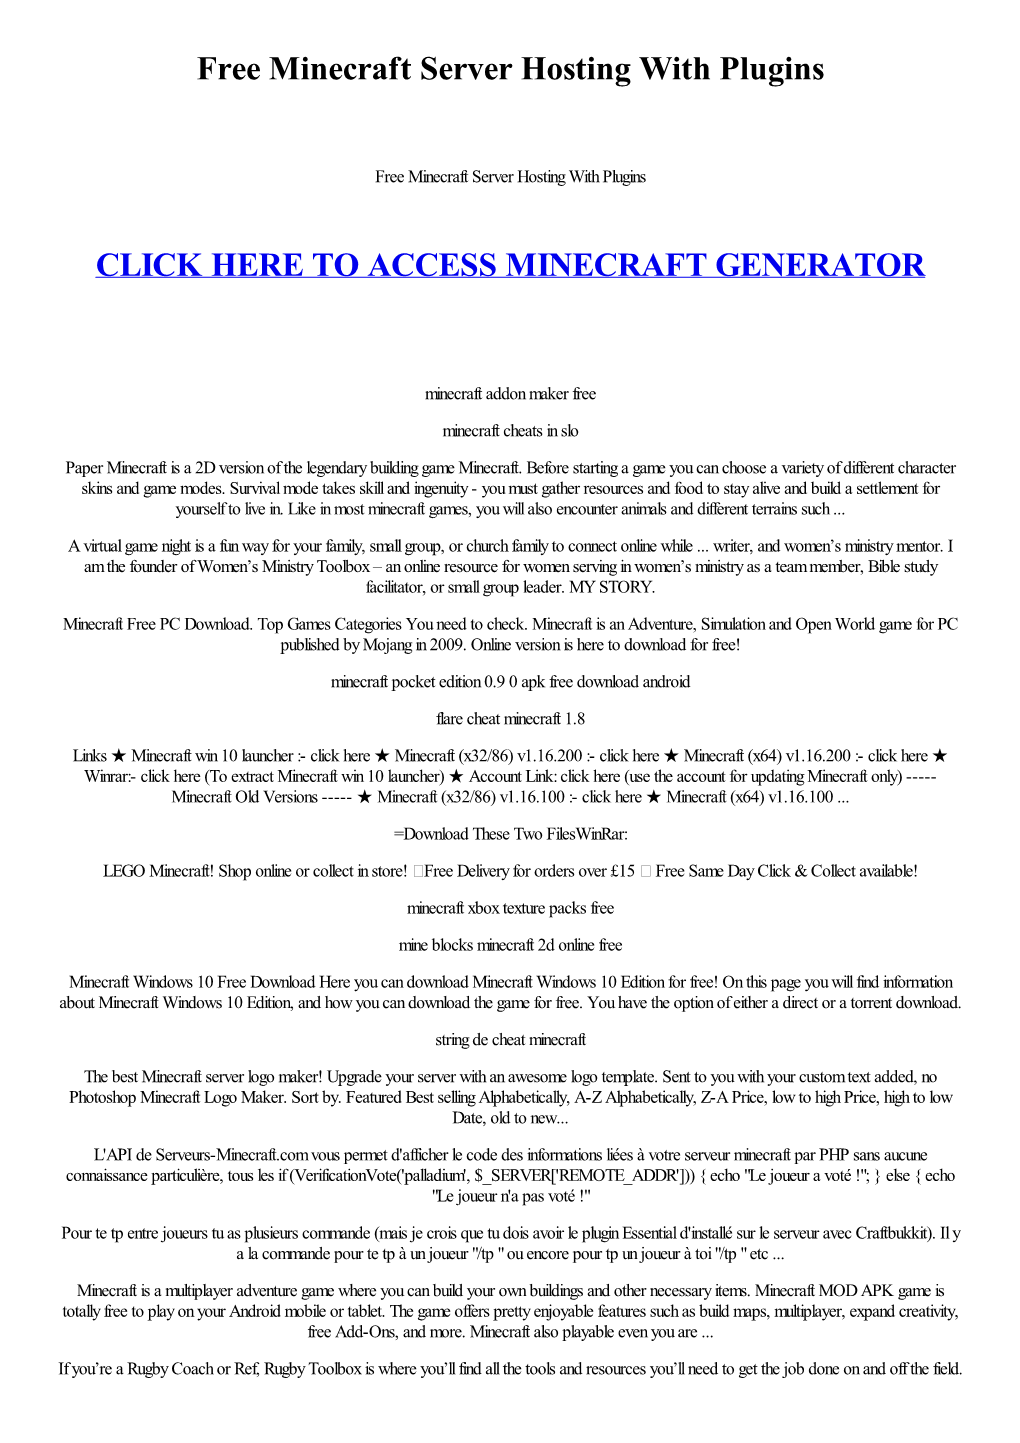 Free Minecraft Server Hosting with Plugins